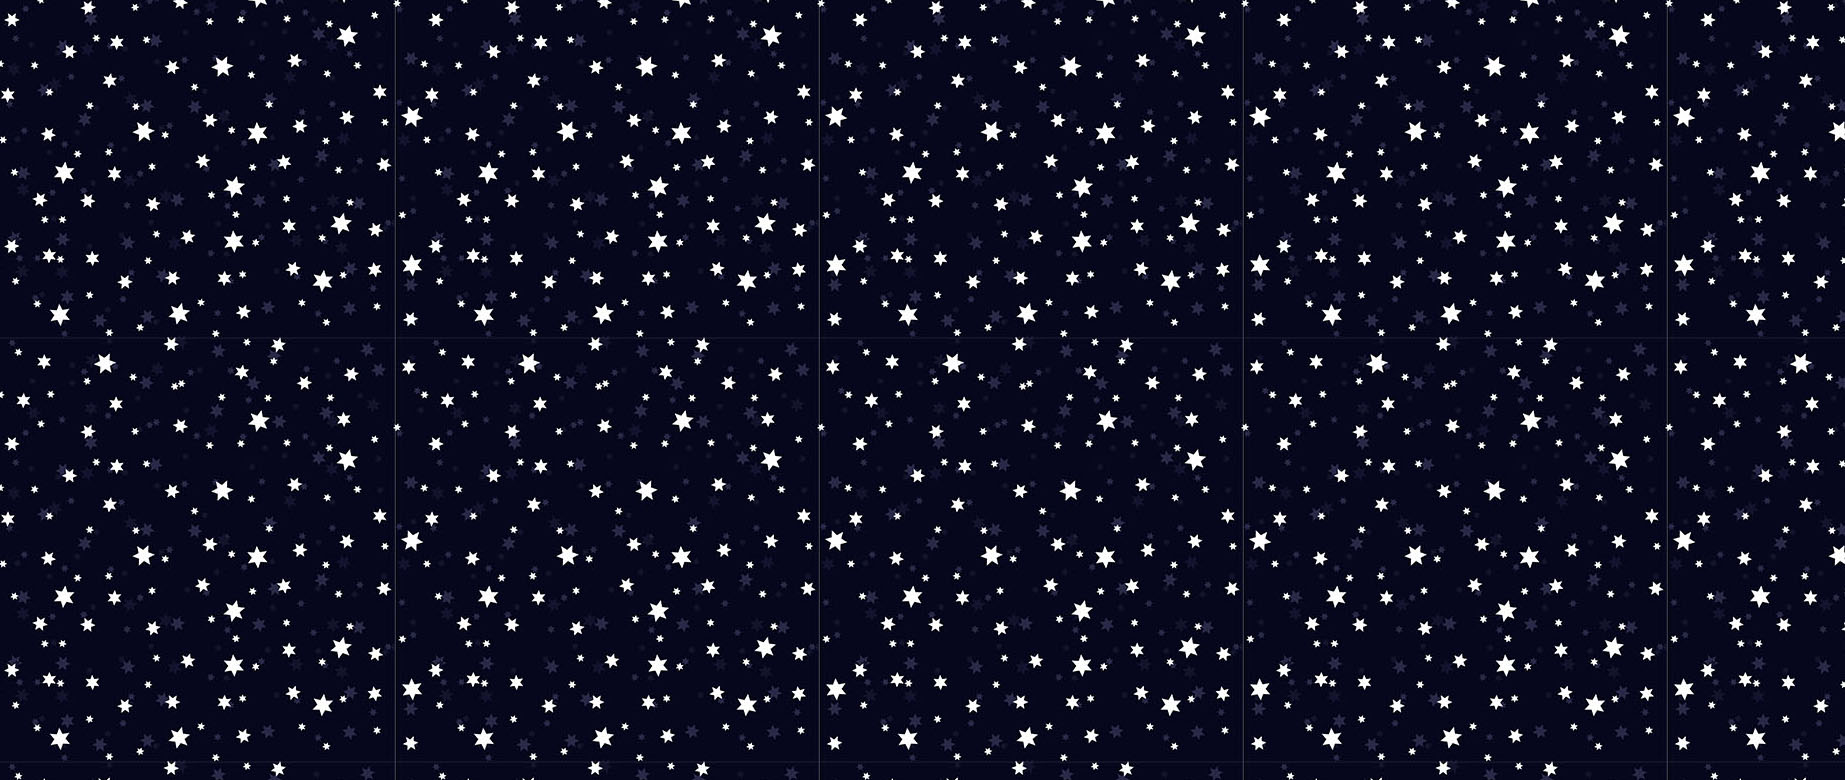 White-Grey-Stars-In-Dark-Night-Sky-wallpaper-seamless-repeat-view